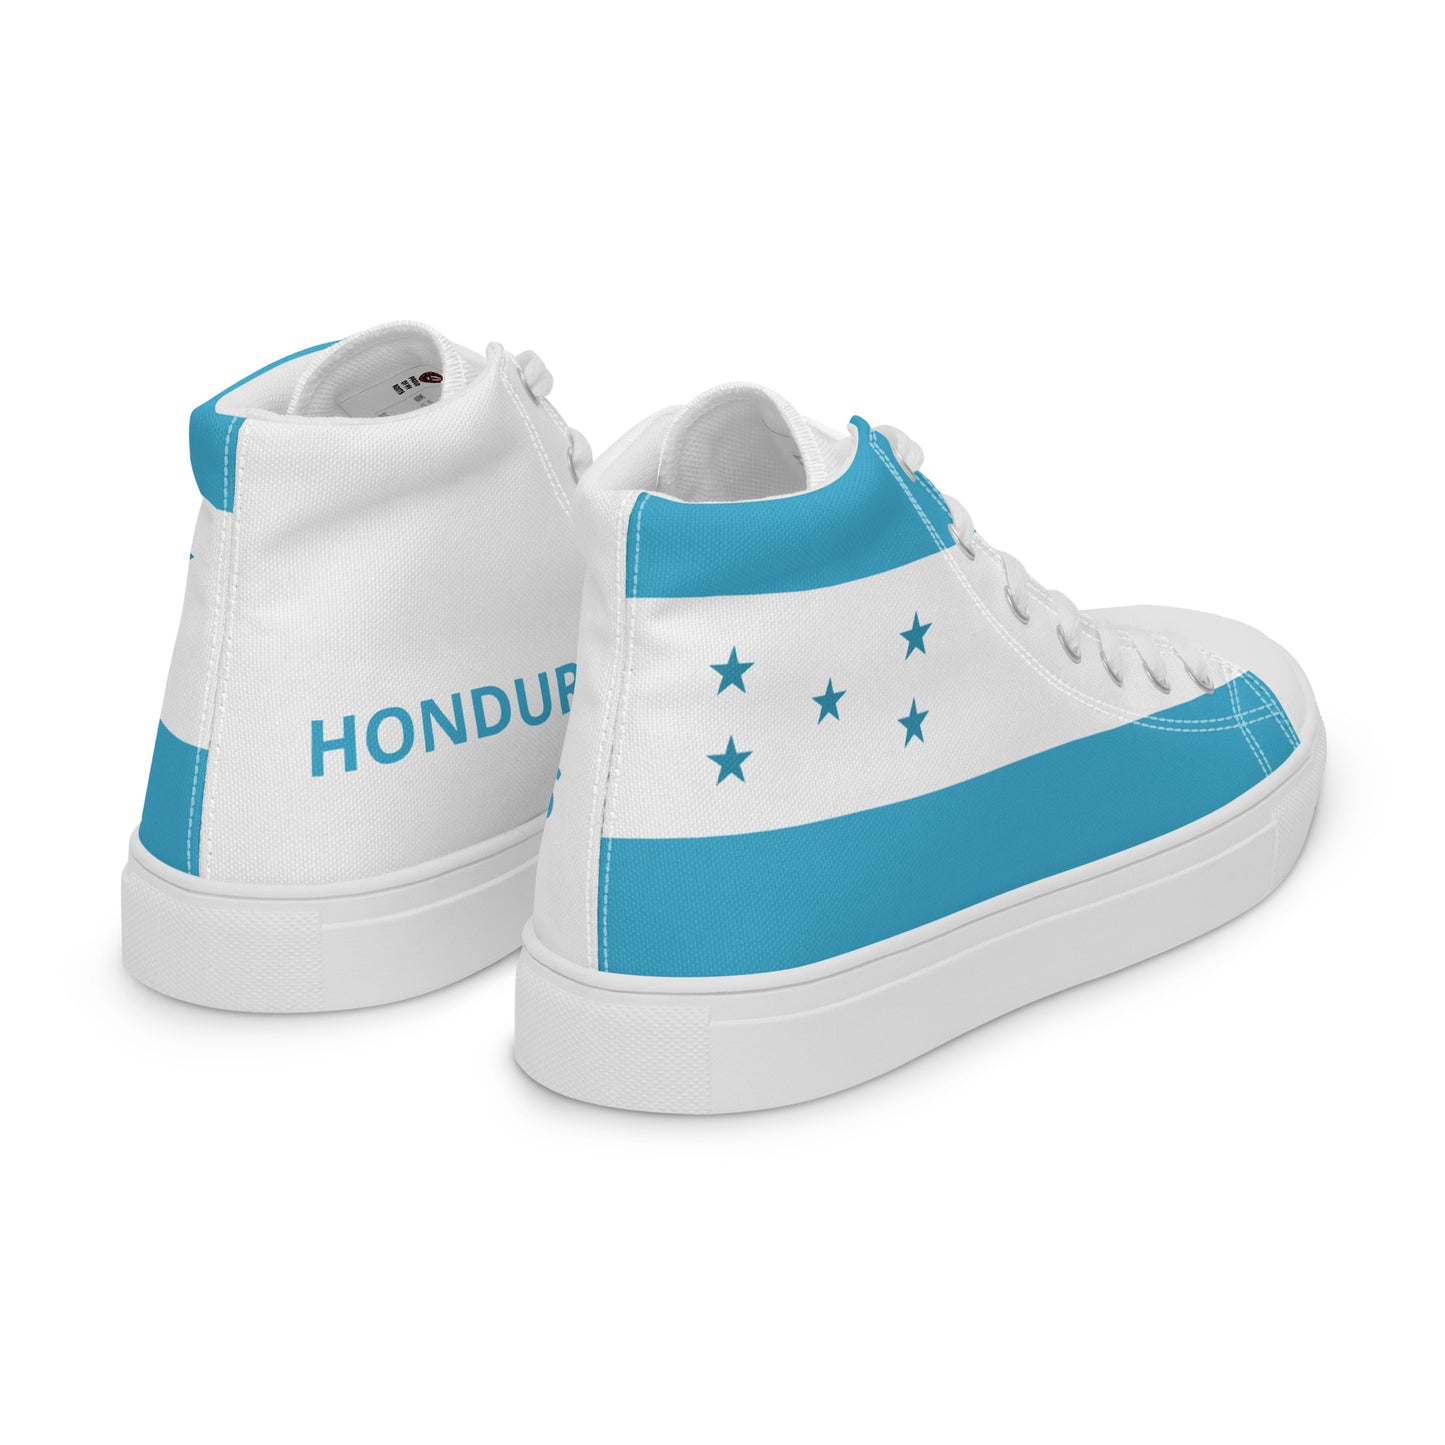 Honduras - Women - Bandera - High top shoes